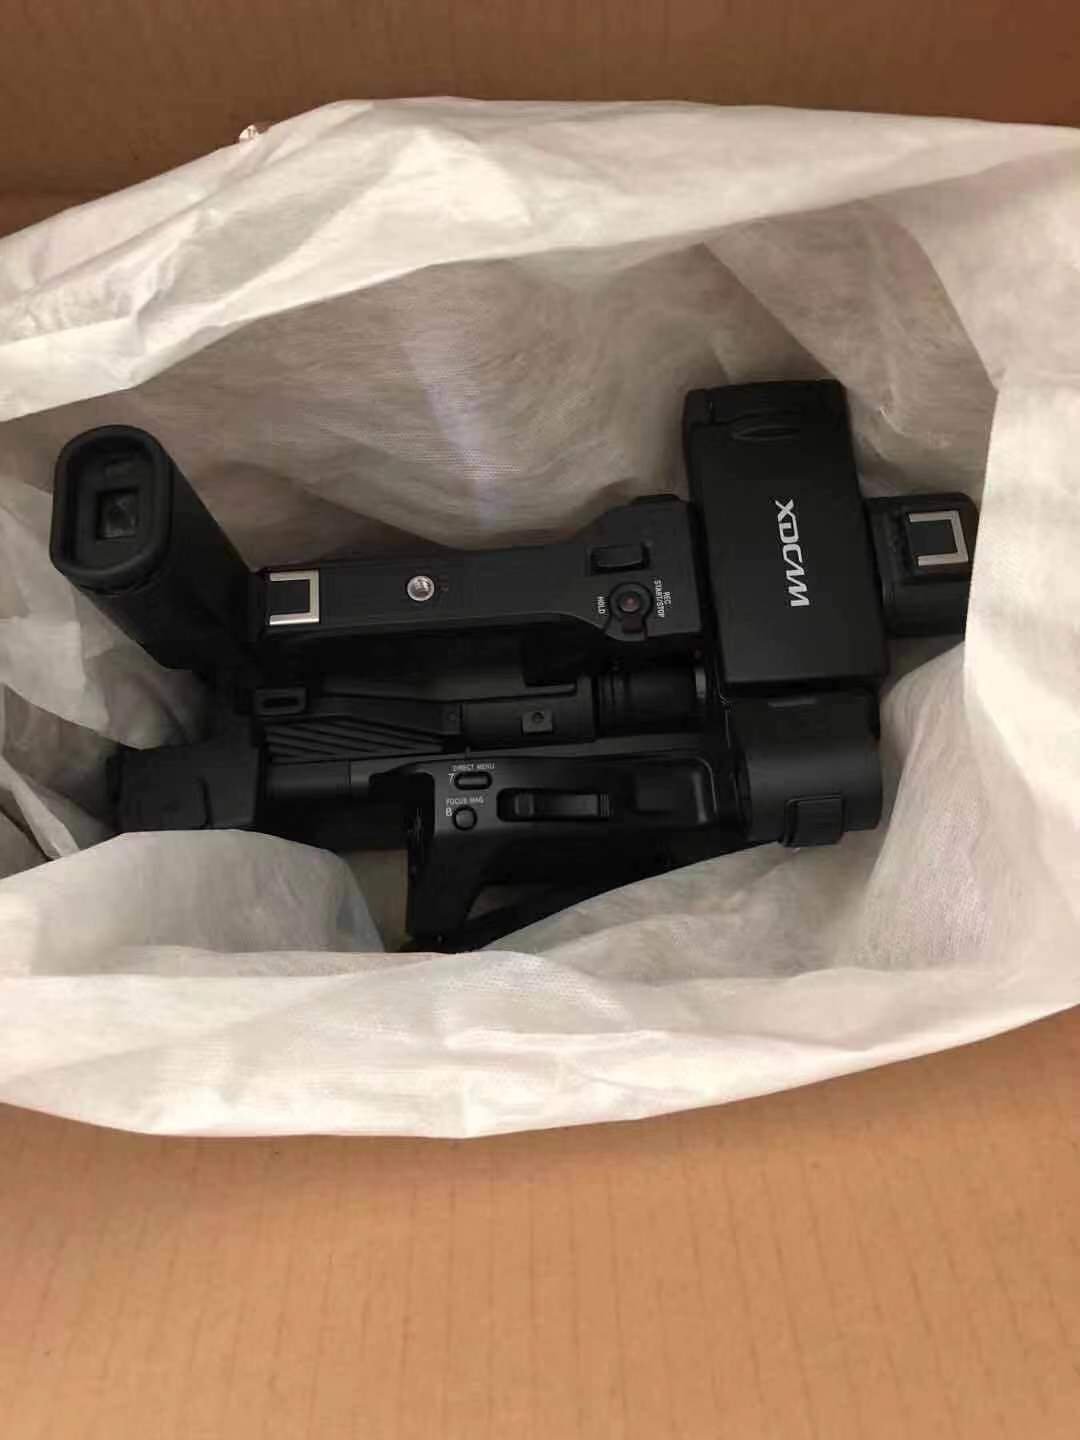  This Sony camera